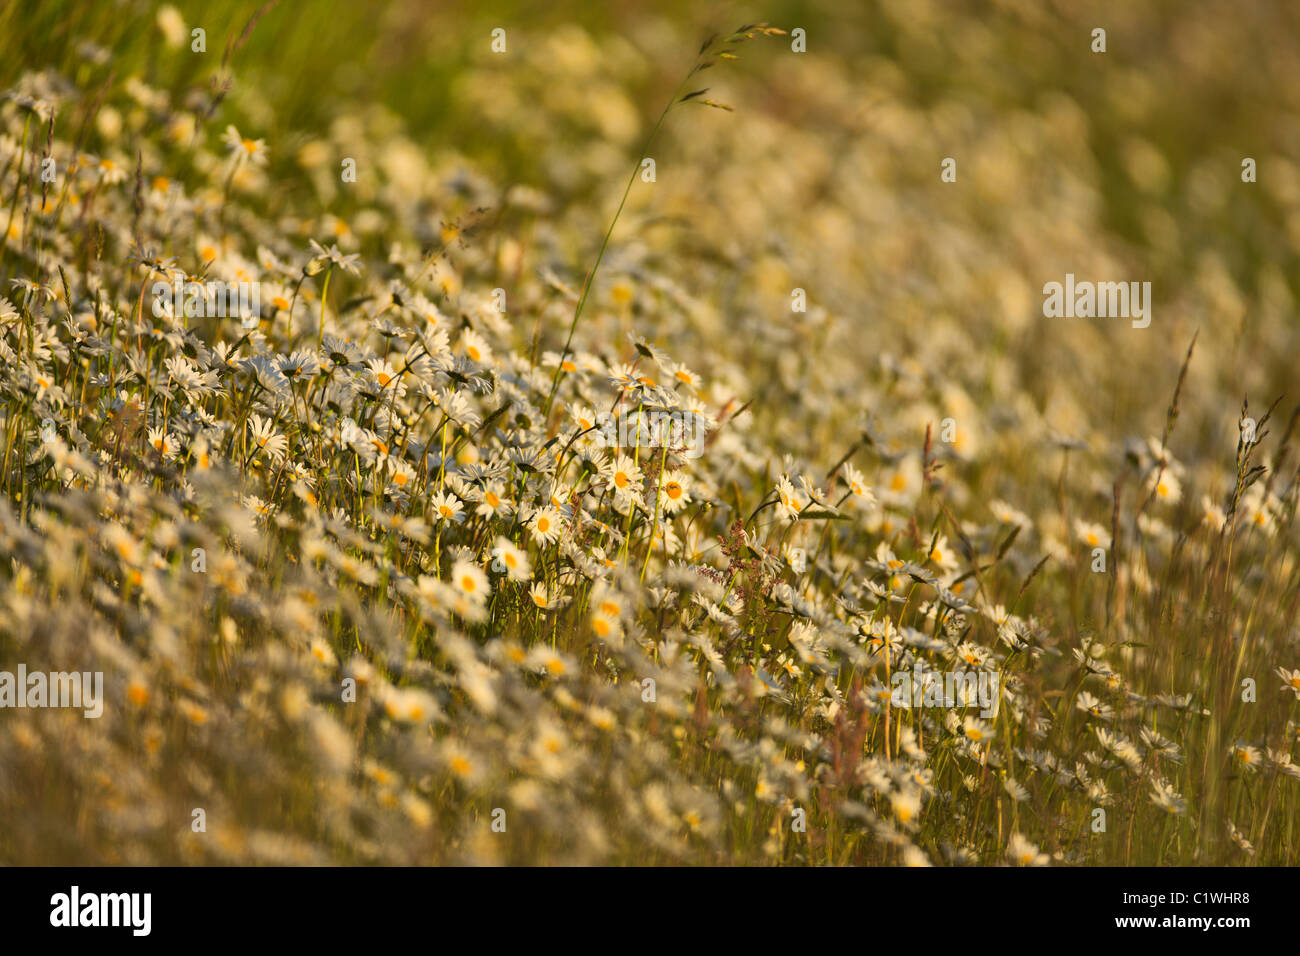 Daisy flowers in a field, Victoria, Vancouver Island, British Columbia, Canada Stock Photo